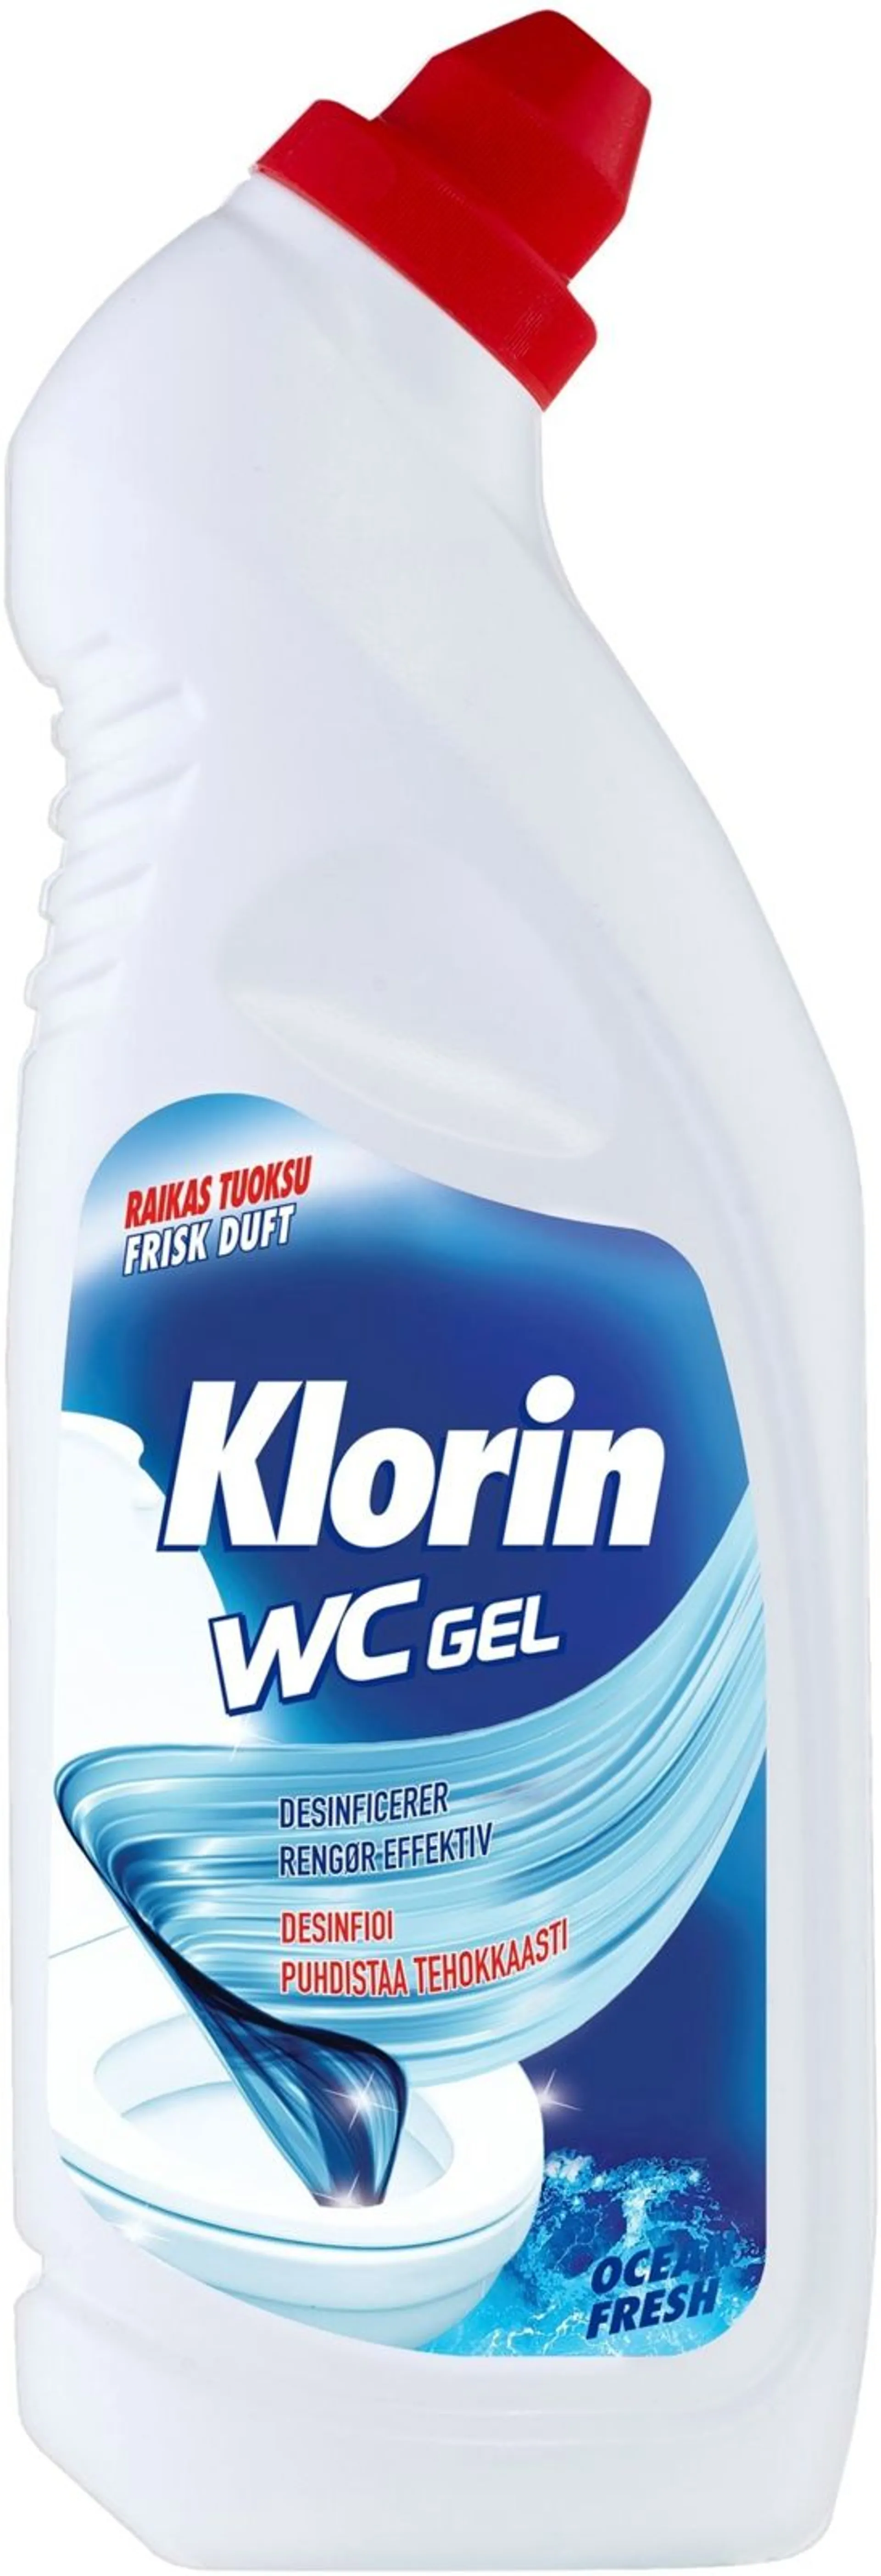 Klorin WC Gel Ocean Fresh WC-puhdistusgeeli 750 ml